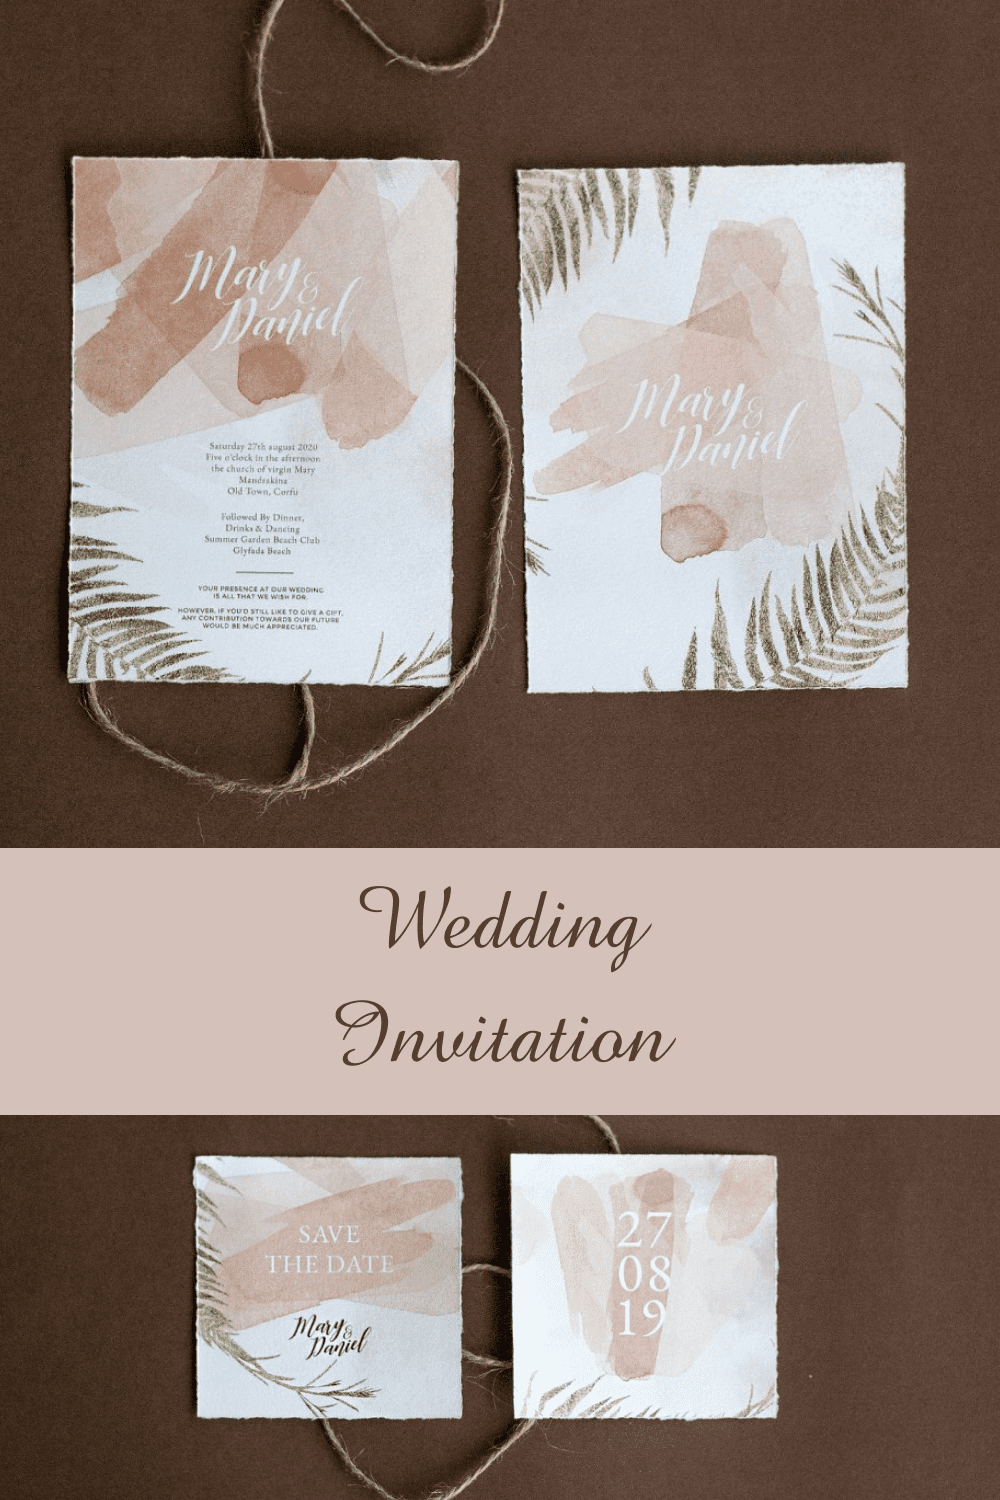 Wedding Invitation Pinterest image.